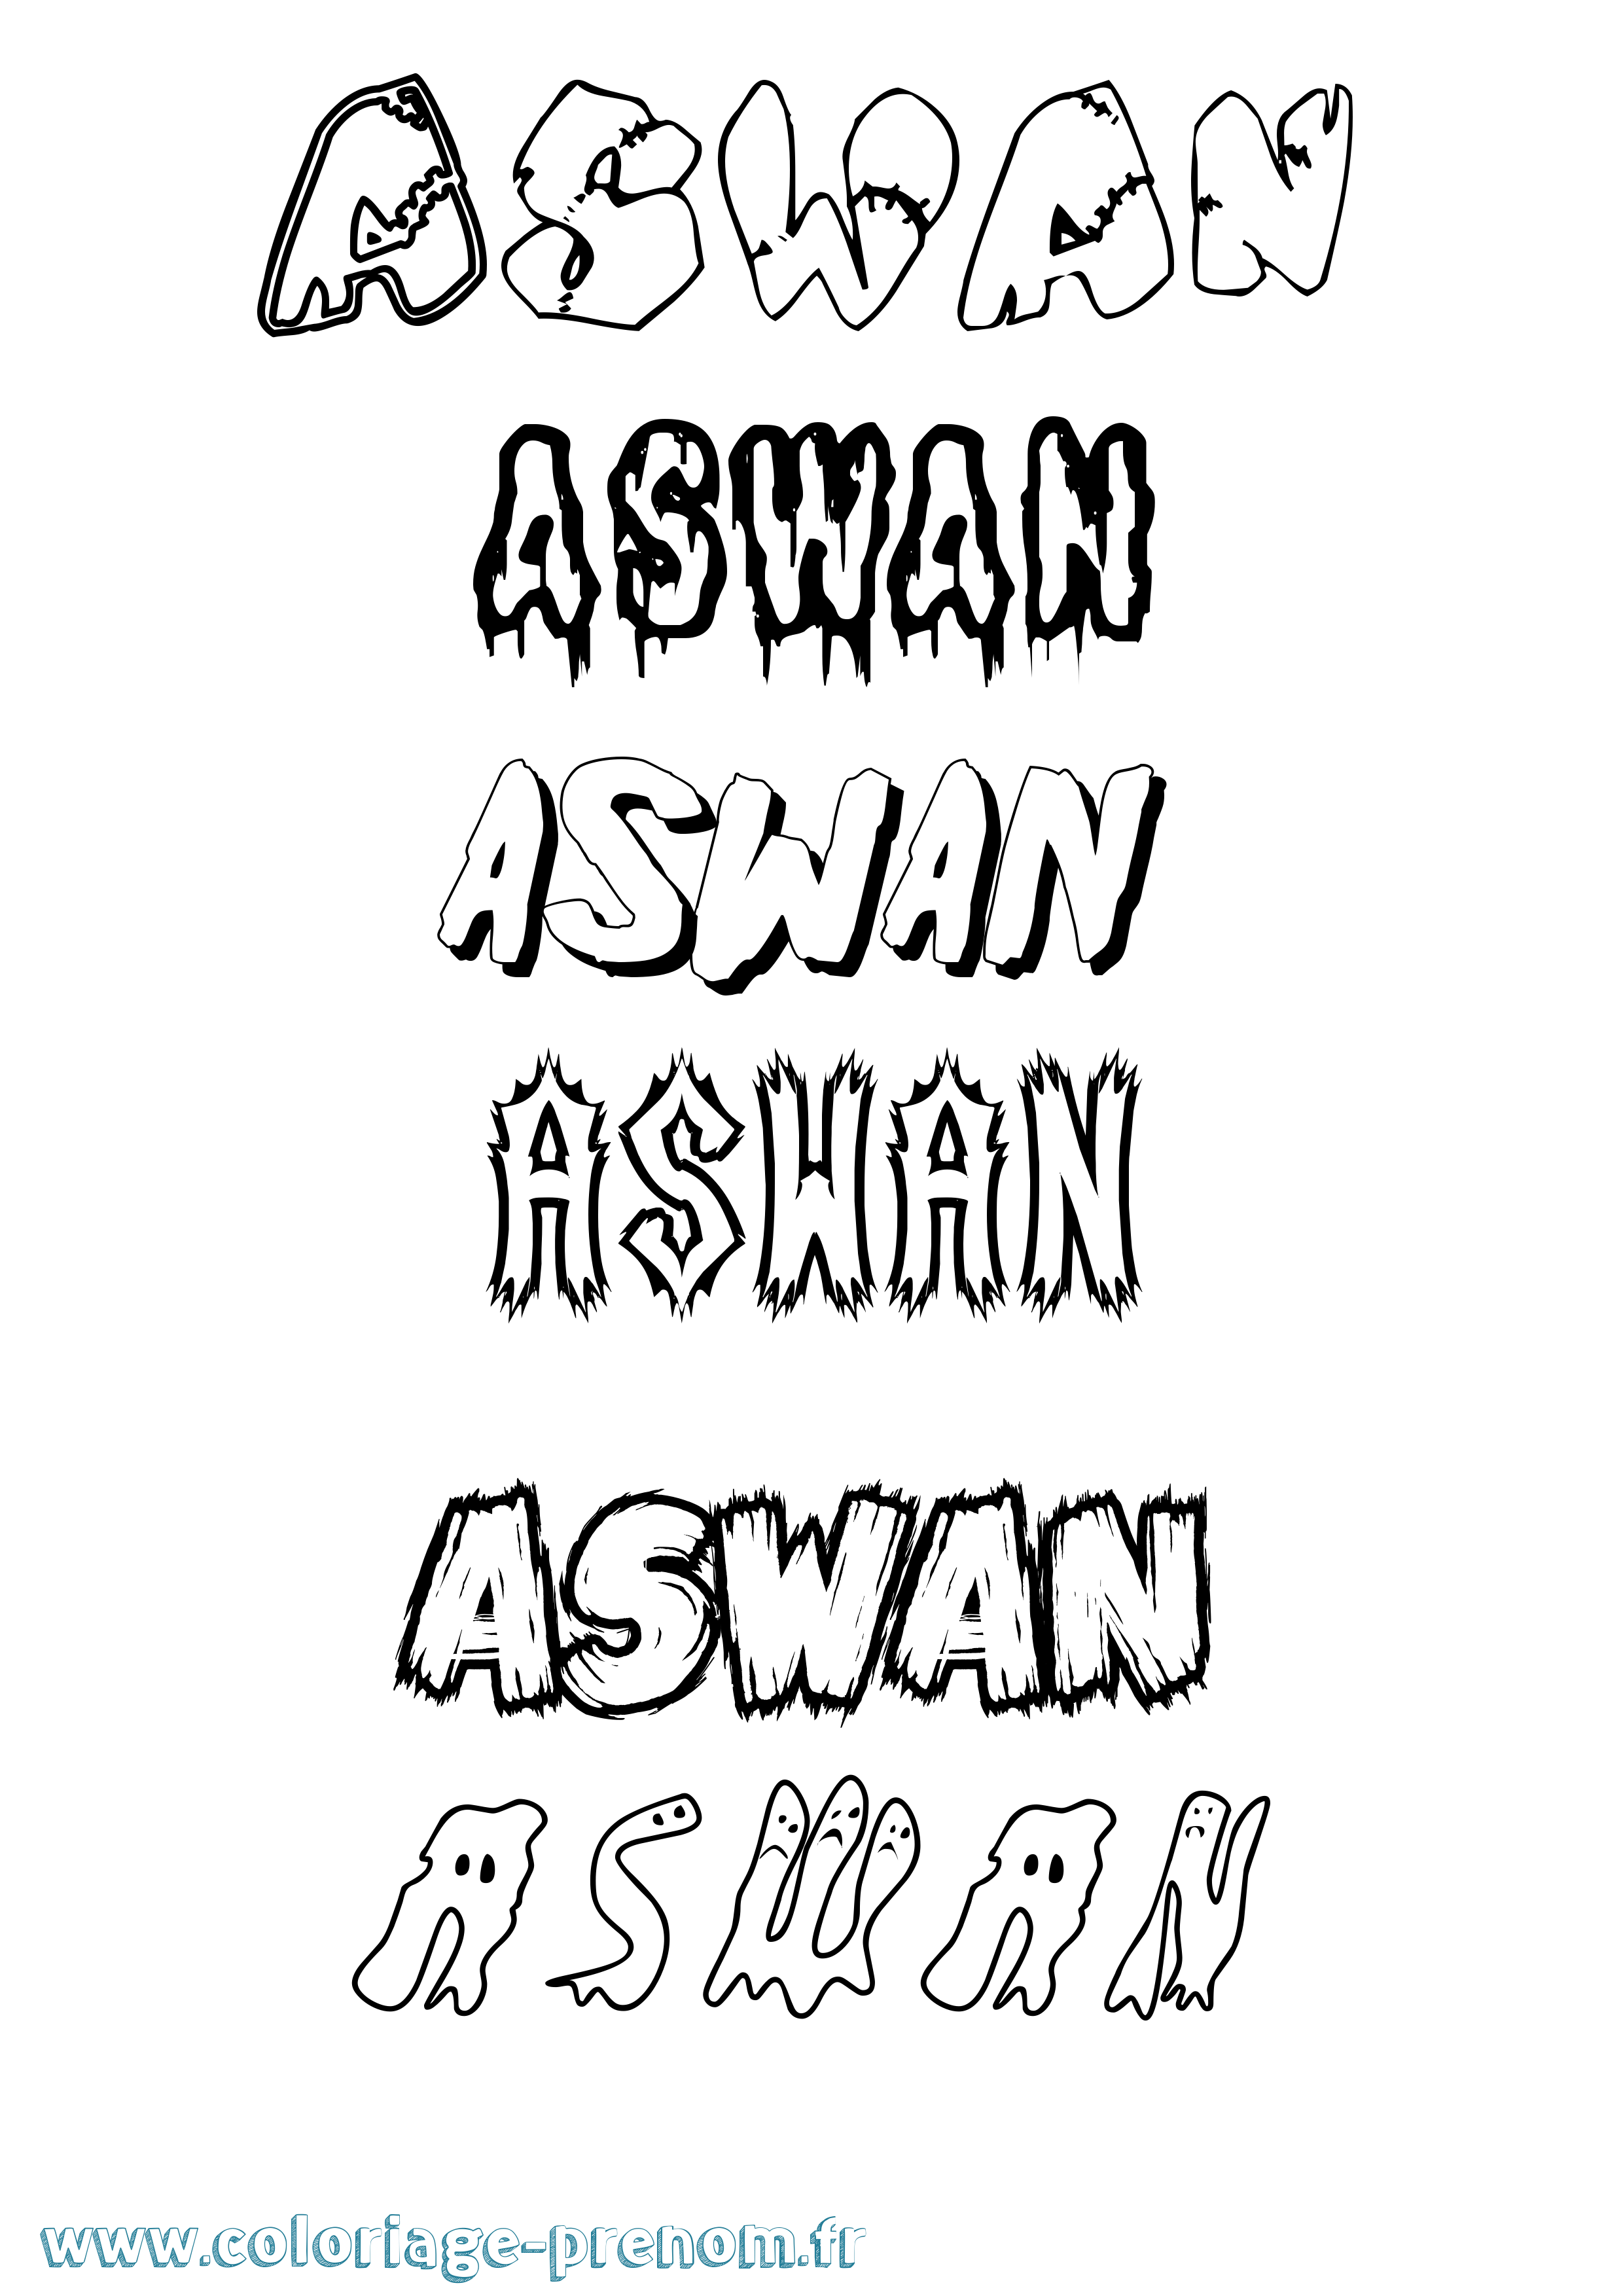 Coloriage prénom Aswan Frisson